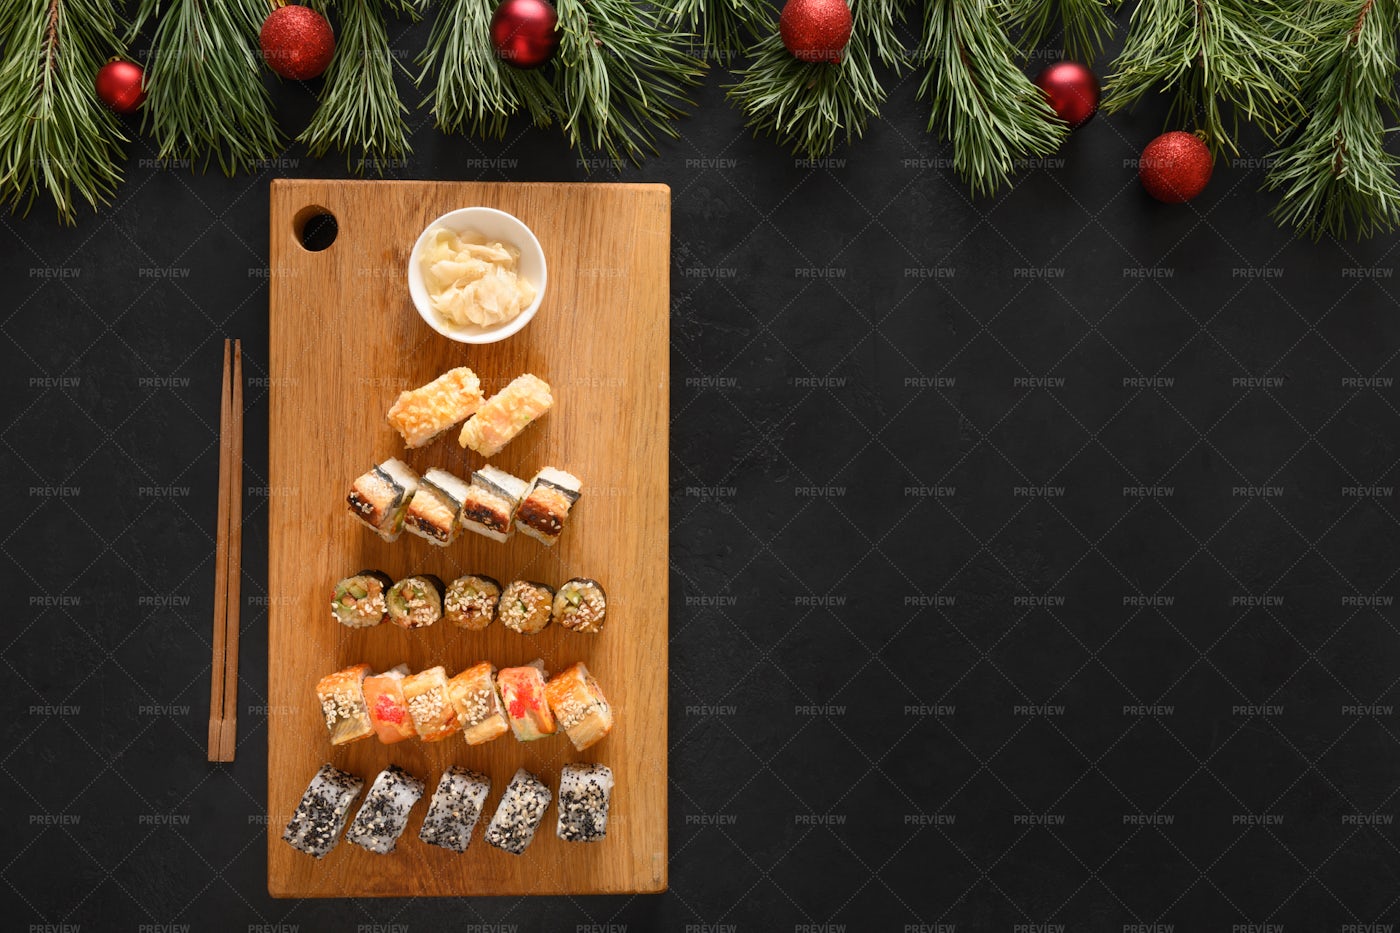 Sushi Set As Christmas Tree: Stock Photos